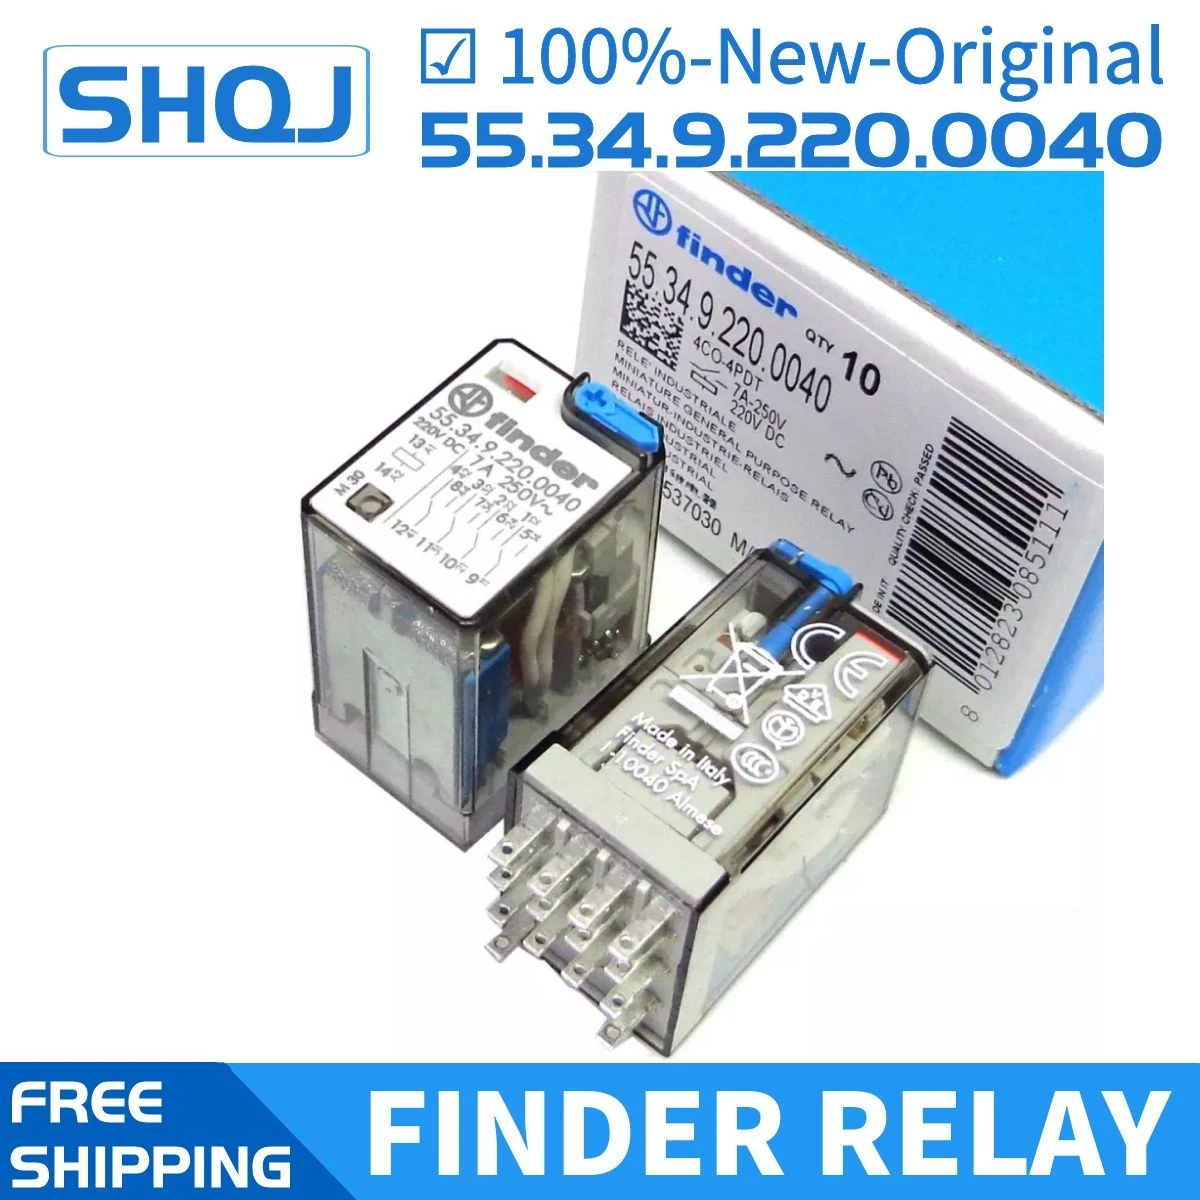 

finder relay 55.34.9.220.0040 220VDC 4CO 14PIN 7A 100%-new-original